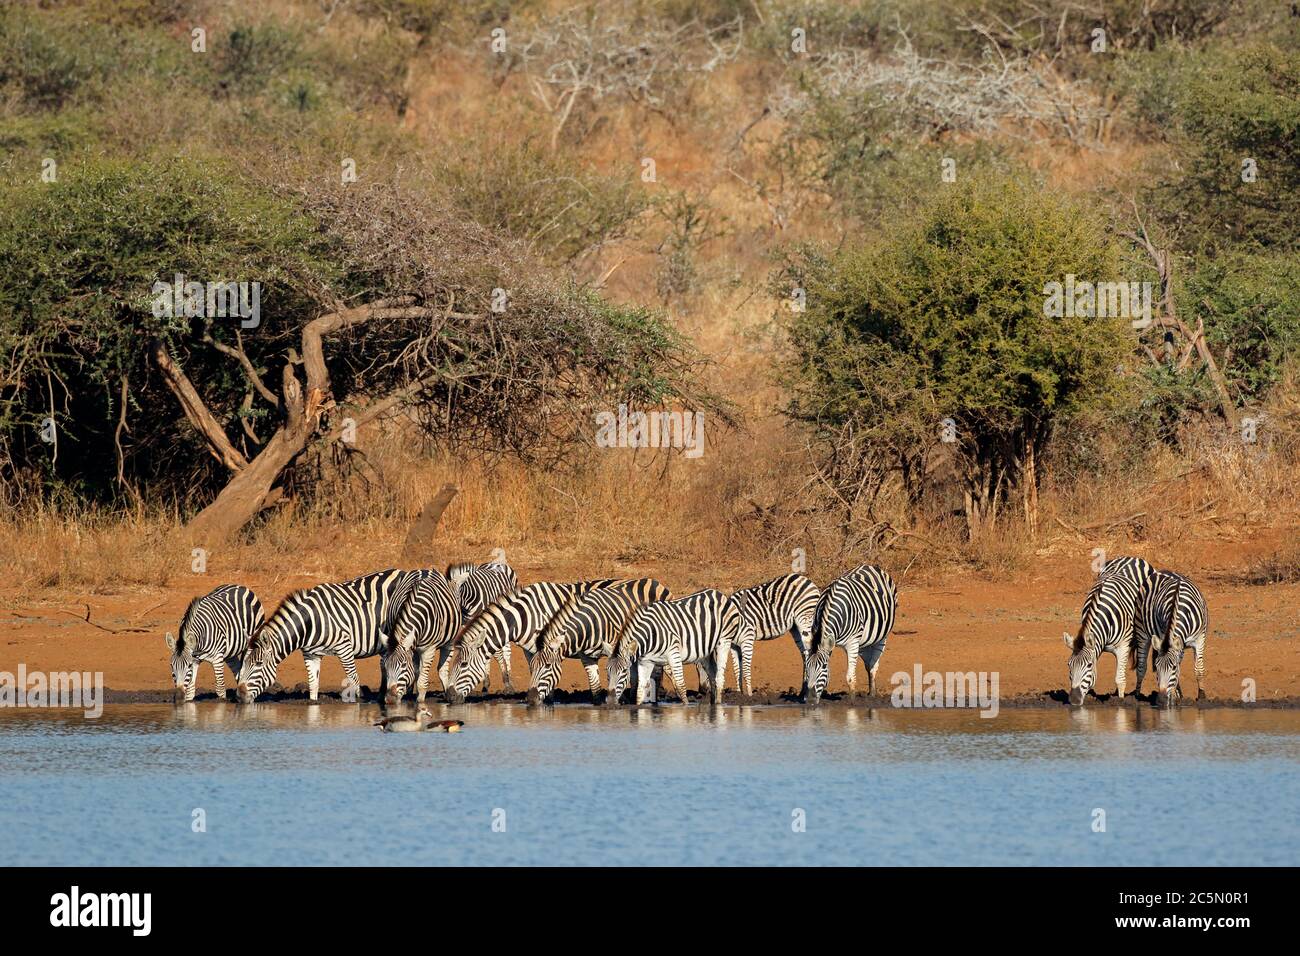 Mandria di pianura zebre (Equus burchelli) acqua potabile, Kruger National Park, Sud Africa Foto Stock